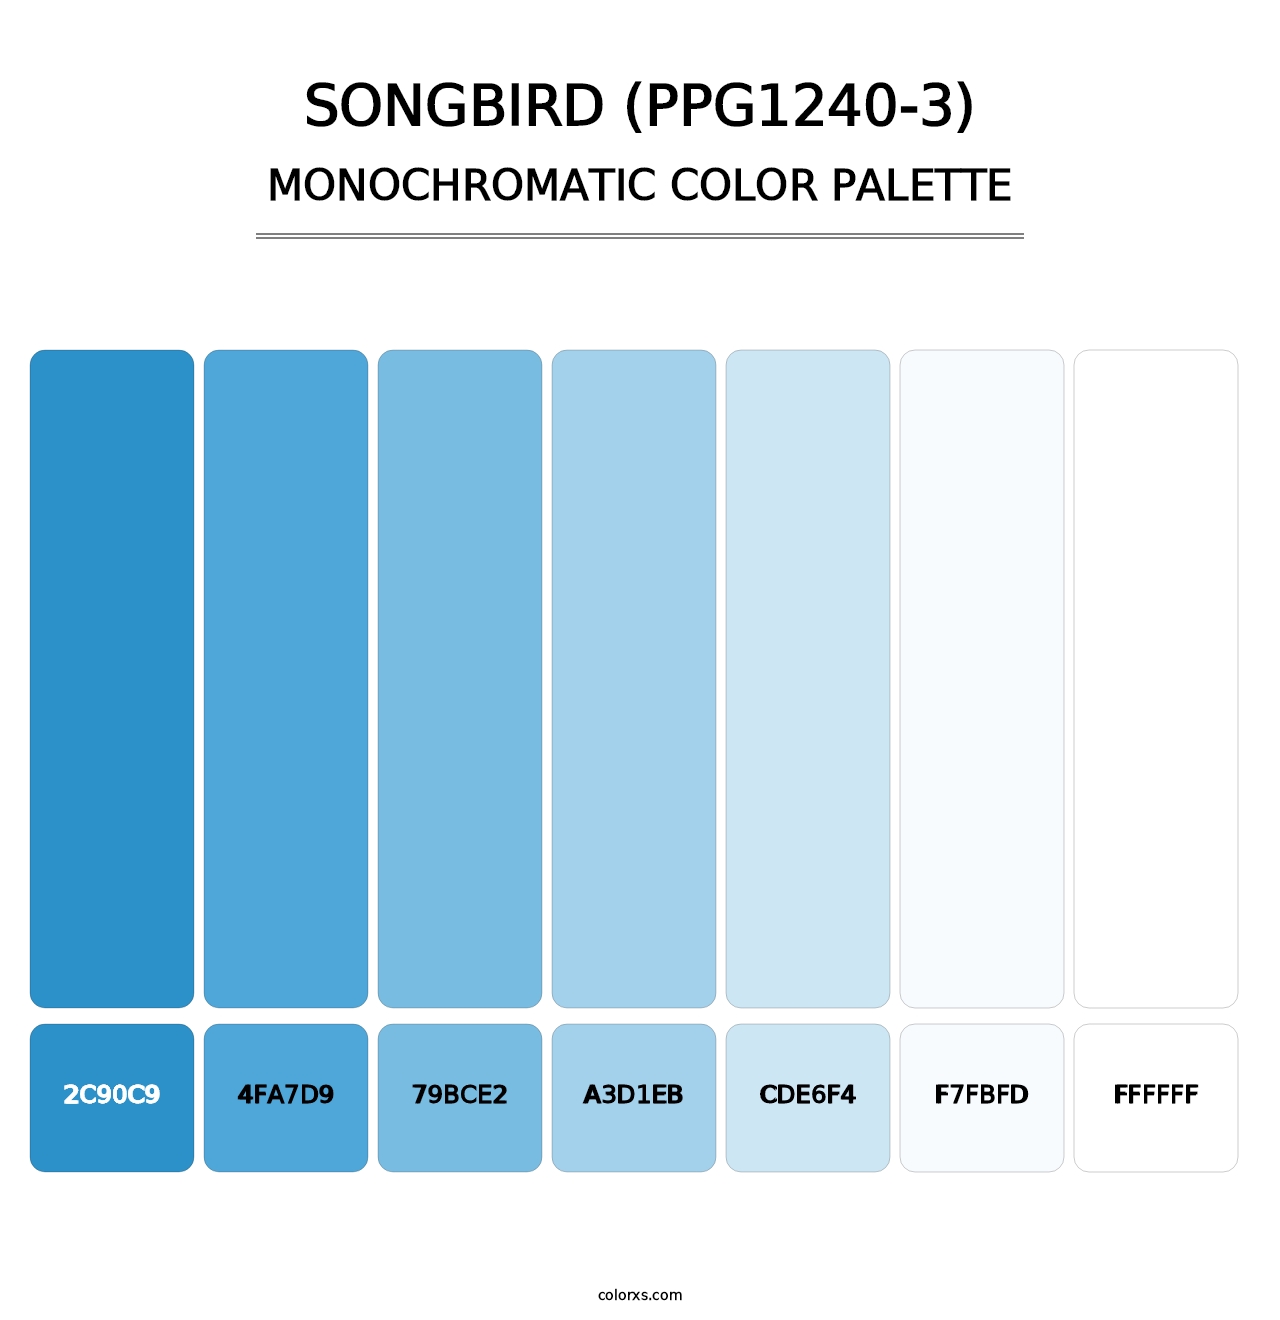 Songbird (PPG1240-3) - Monochromatic Color Palette